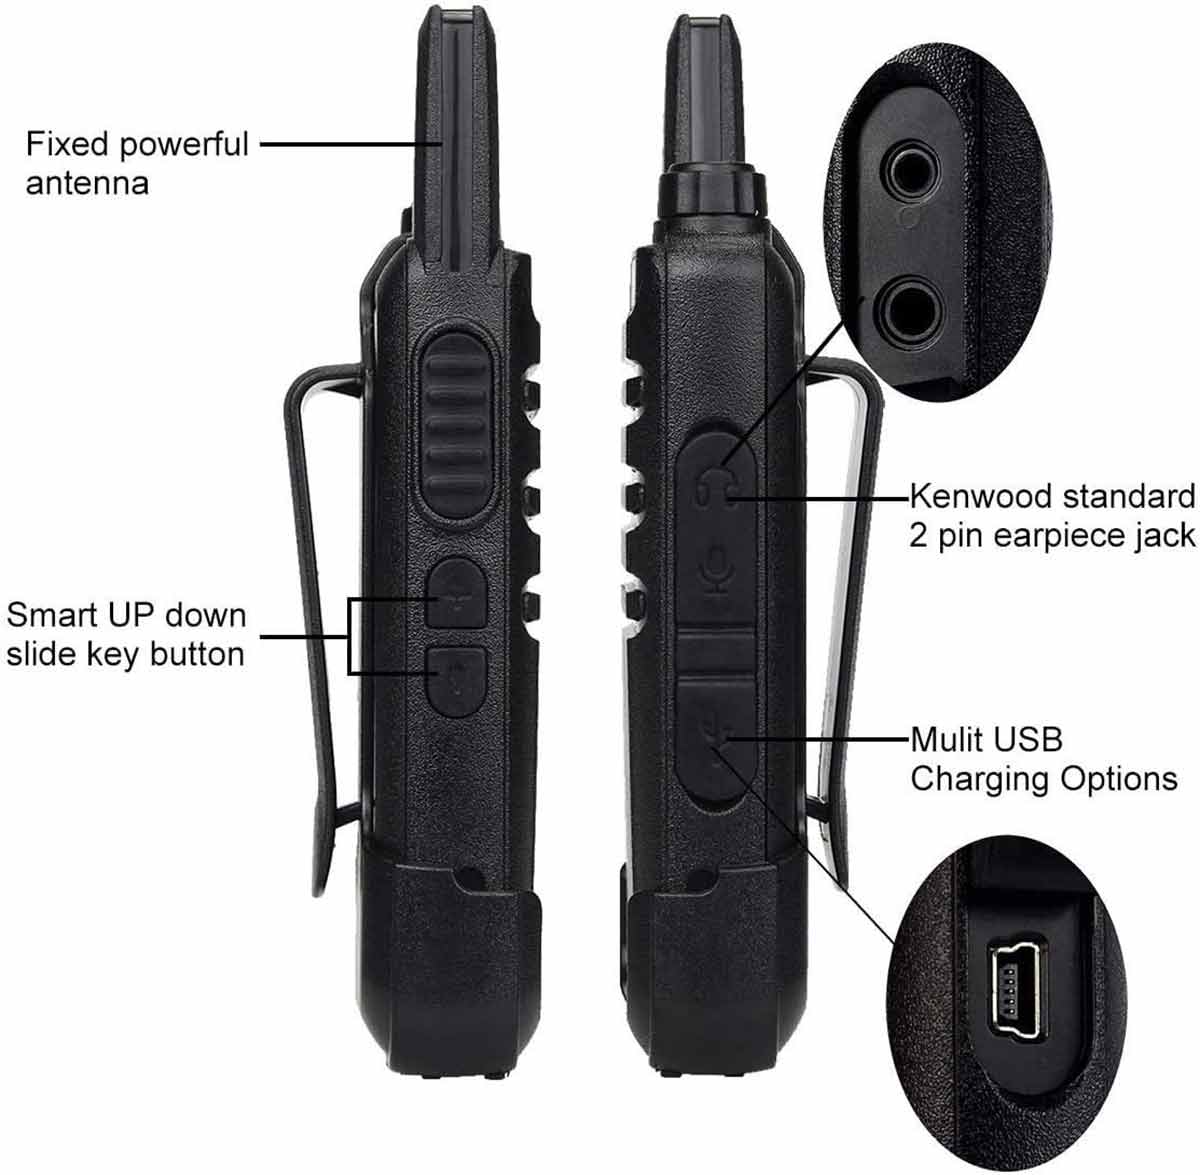 Retevis RT22 portable FRS radio PTT walkie talkies